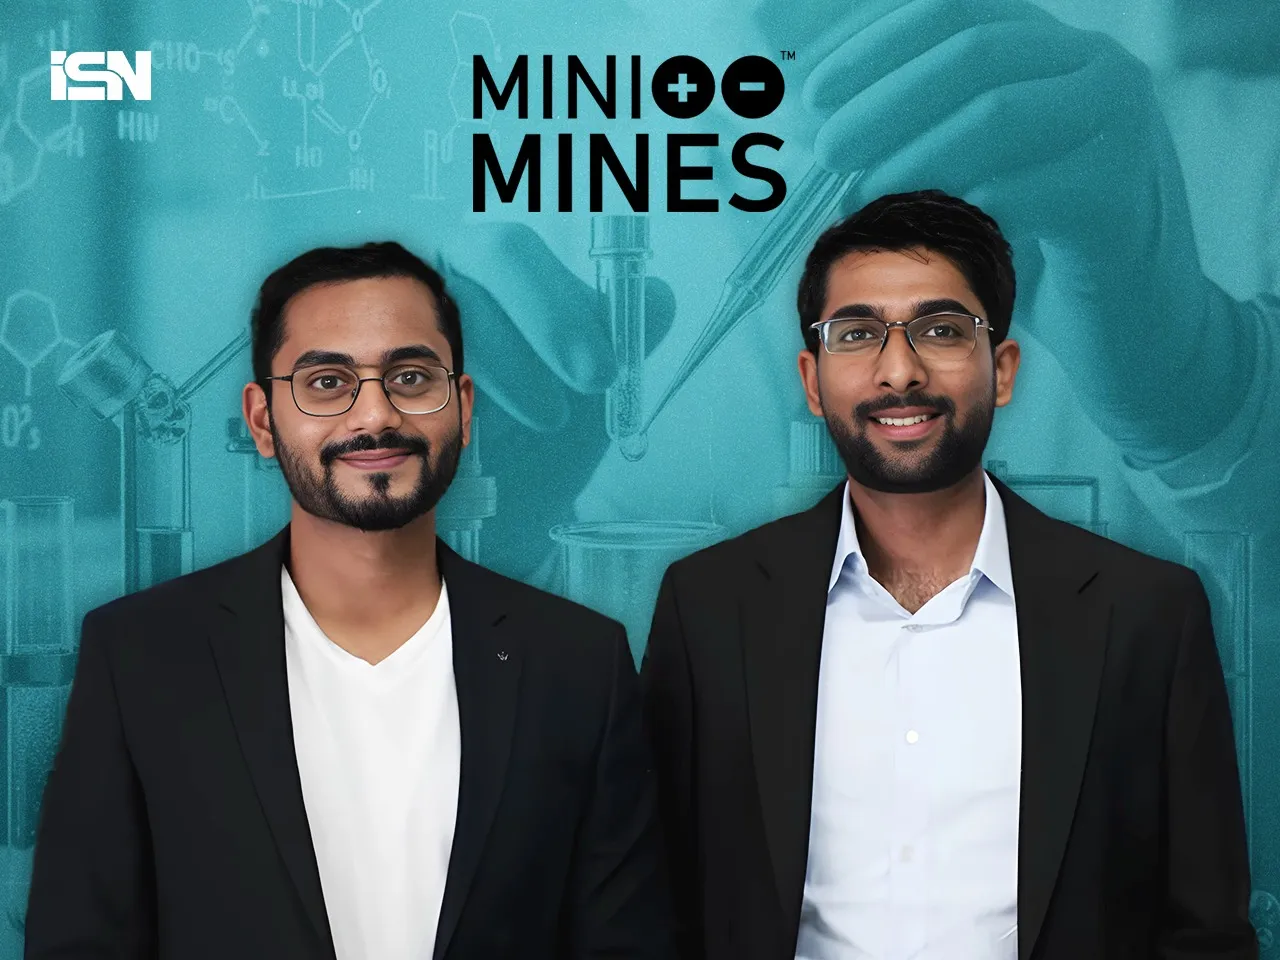 Minimines founders